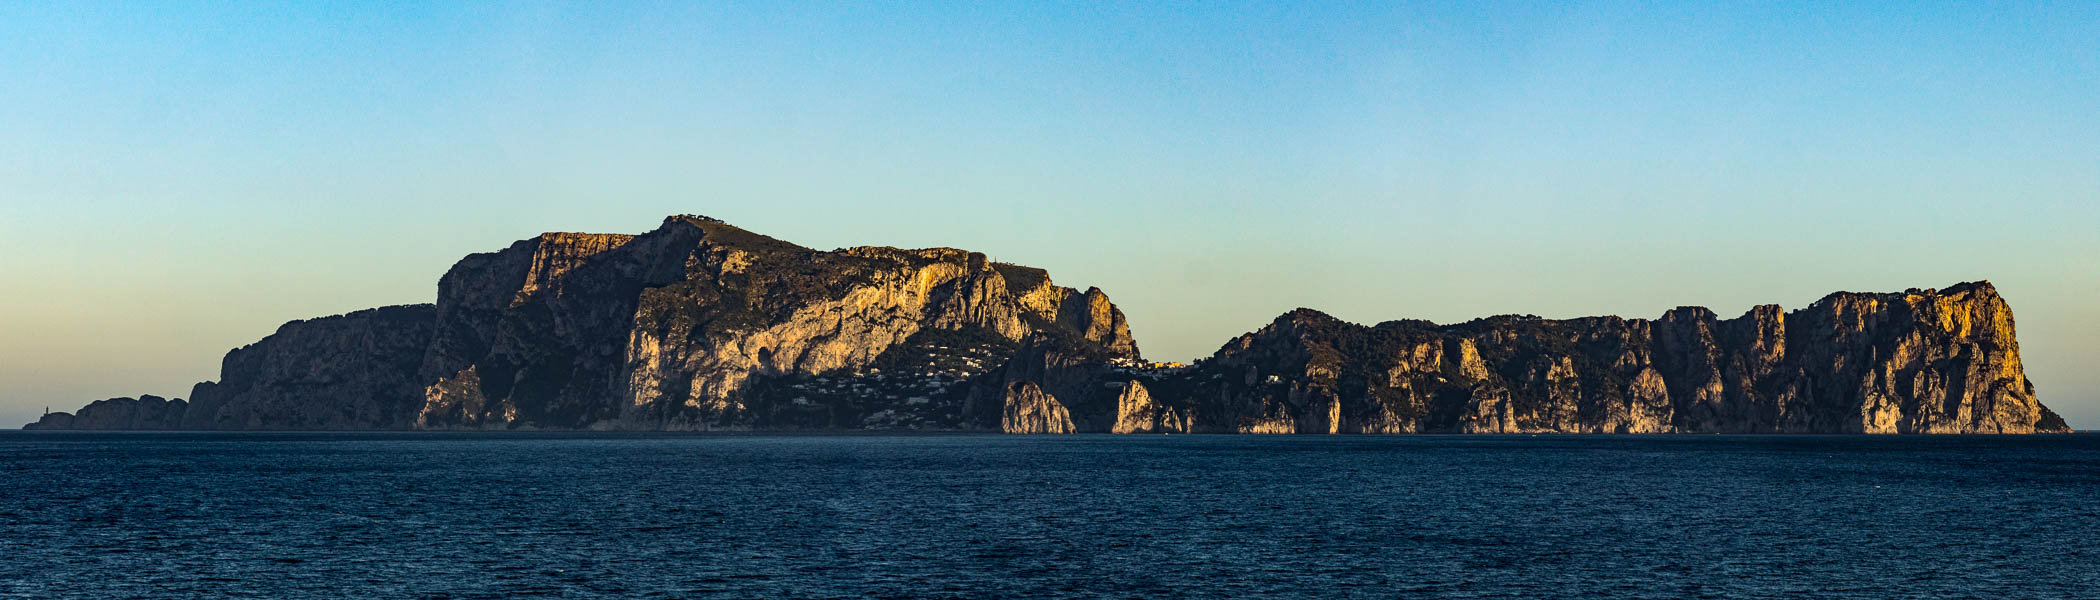 Capri, côte sud